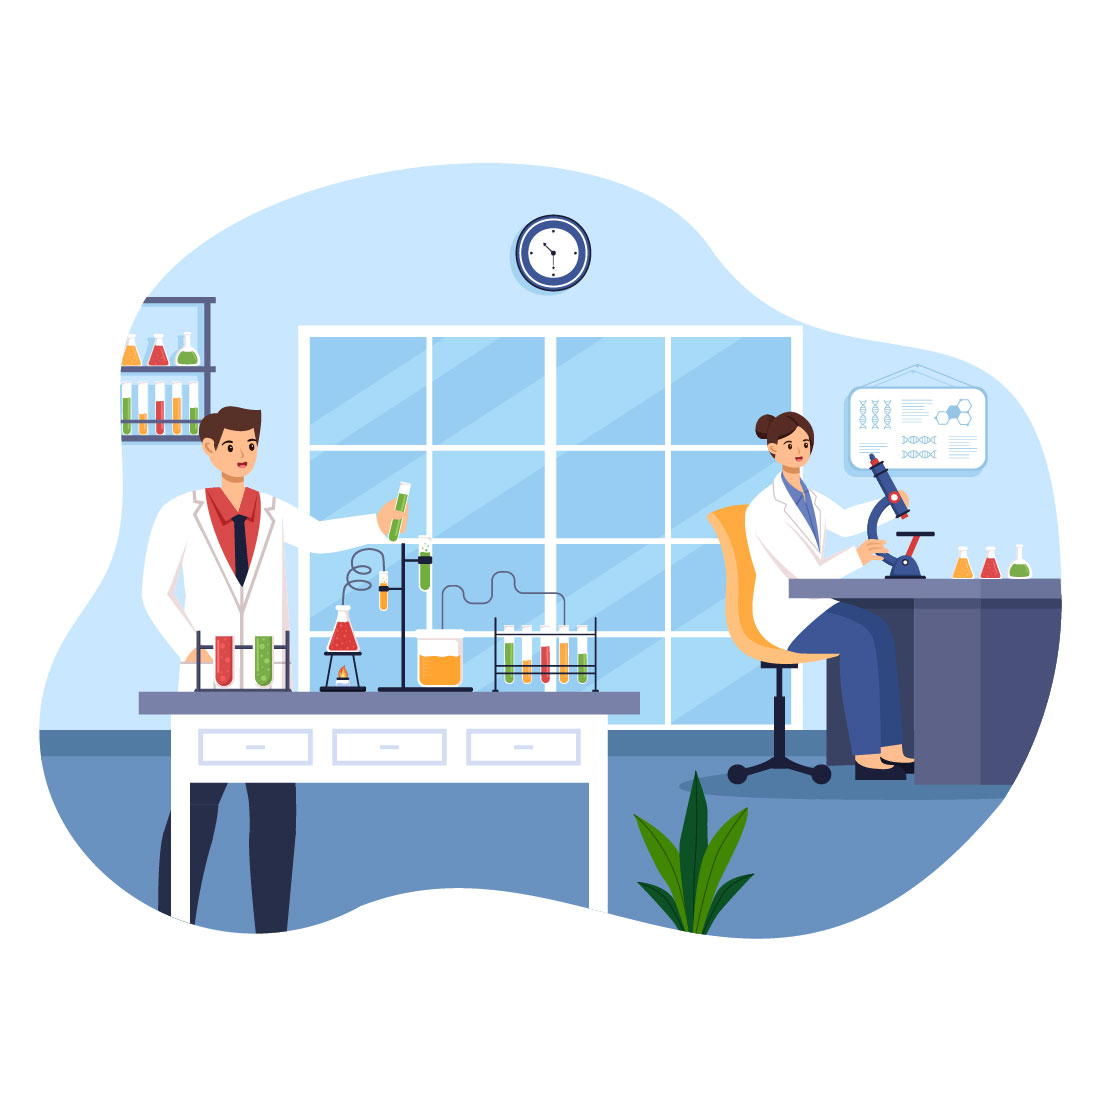 9 Laboratory Illustration cover image.